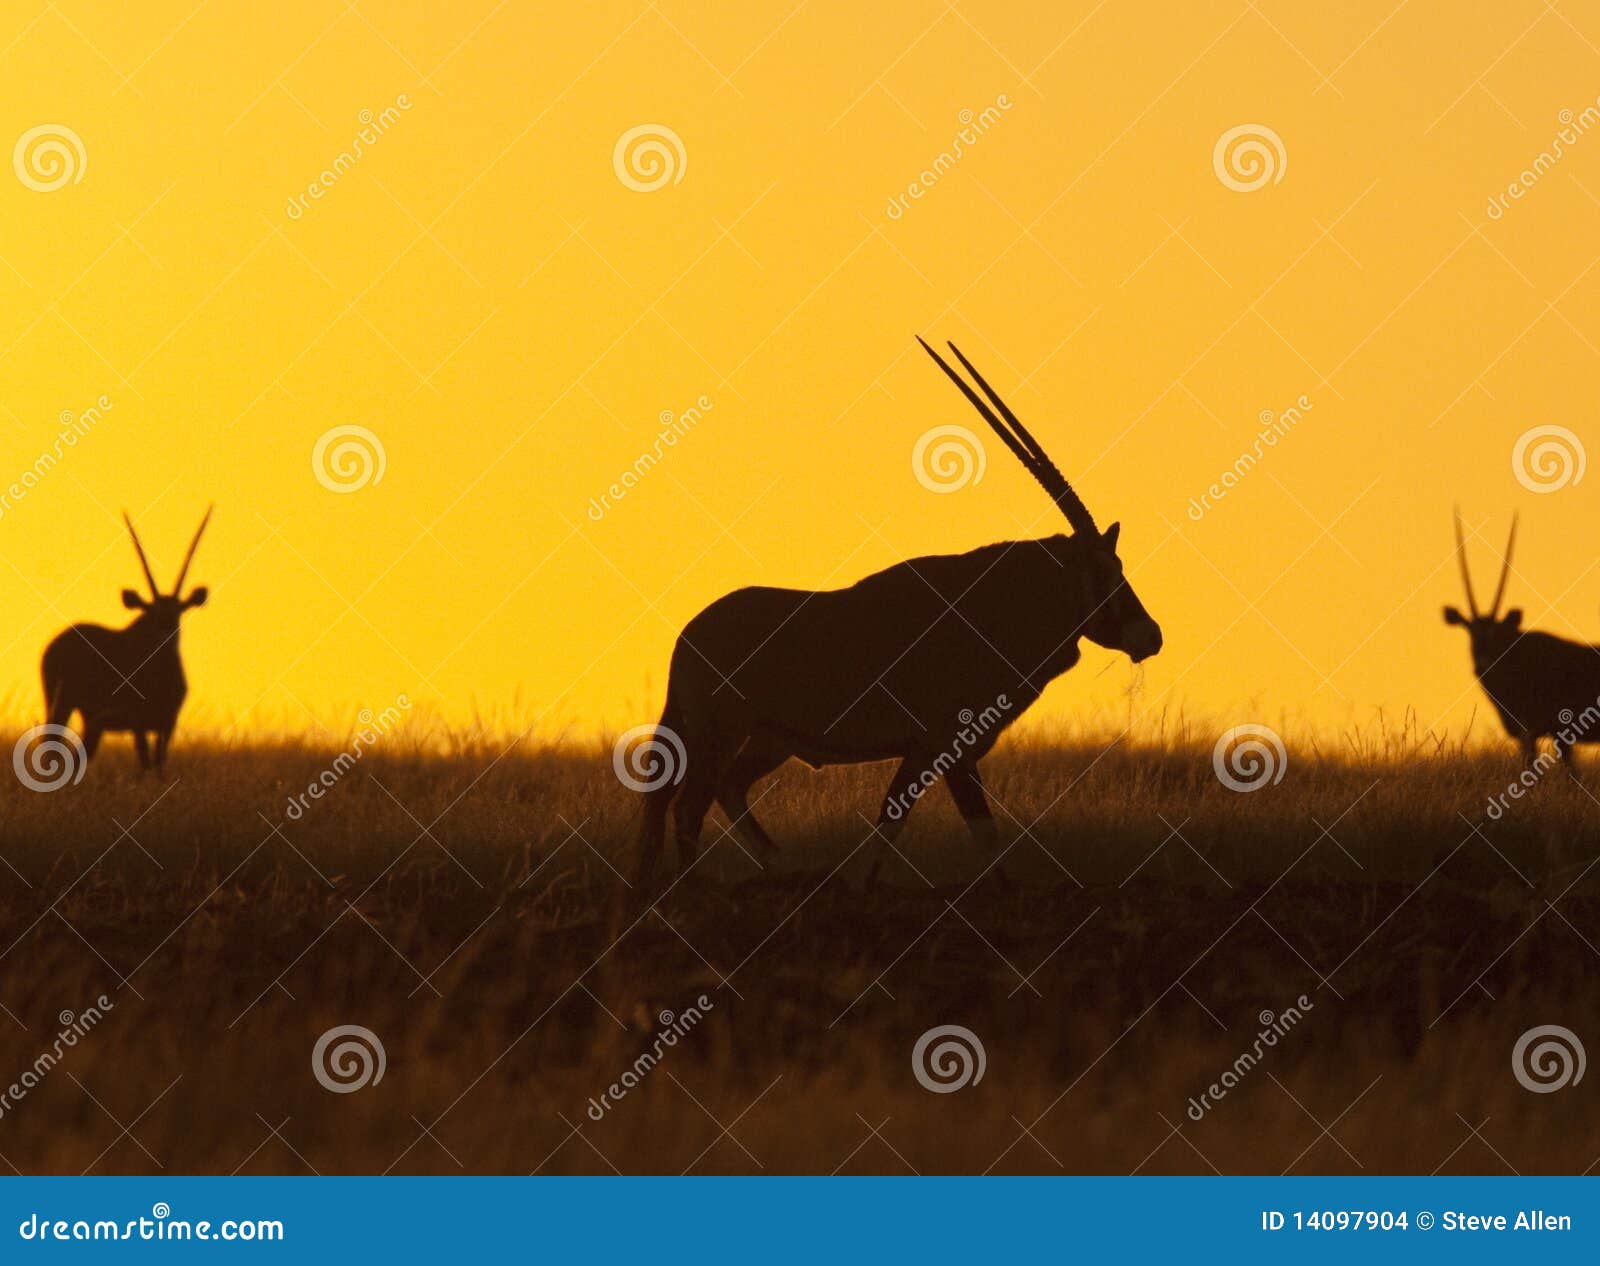 gemsbok (oryx) - damaraland - namibia